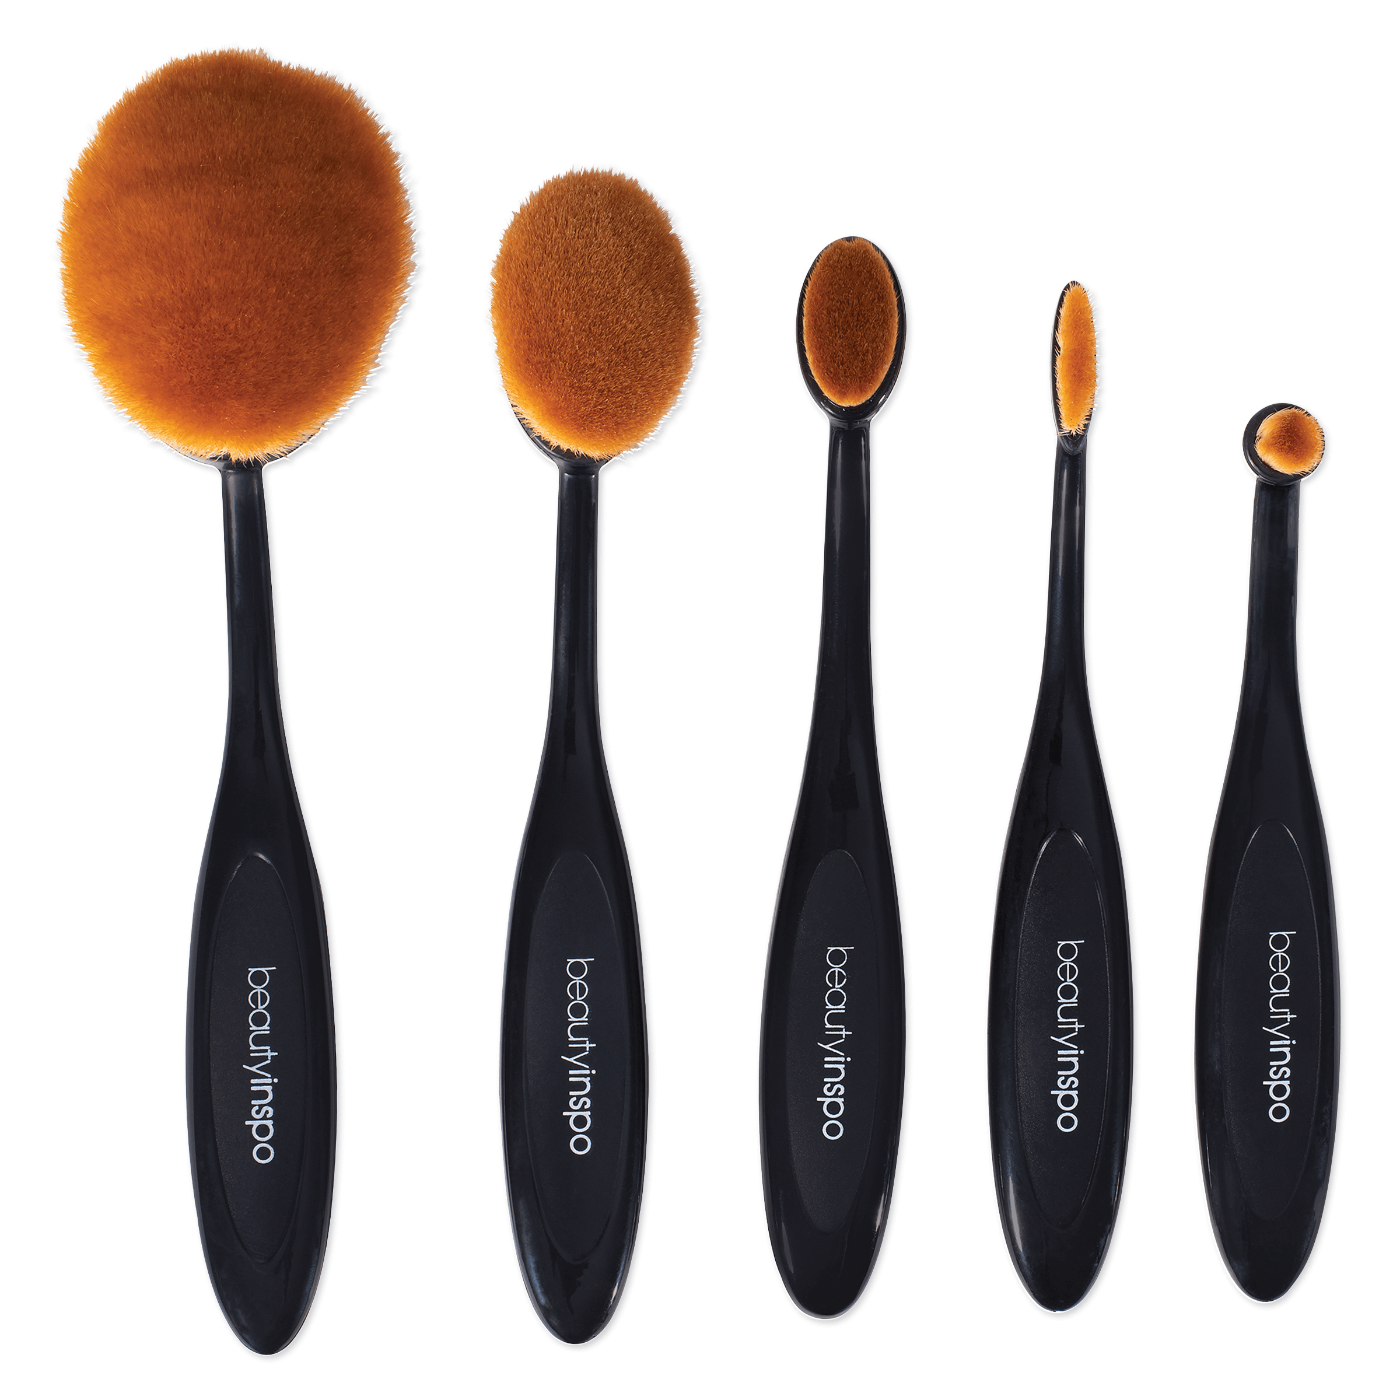 Oval Paddle Makeup Brush Set